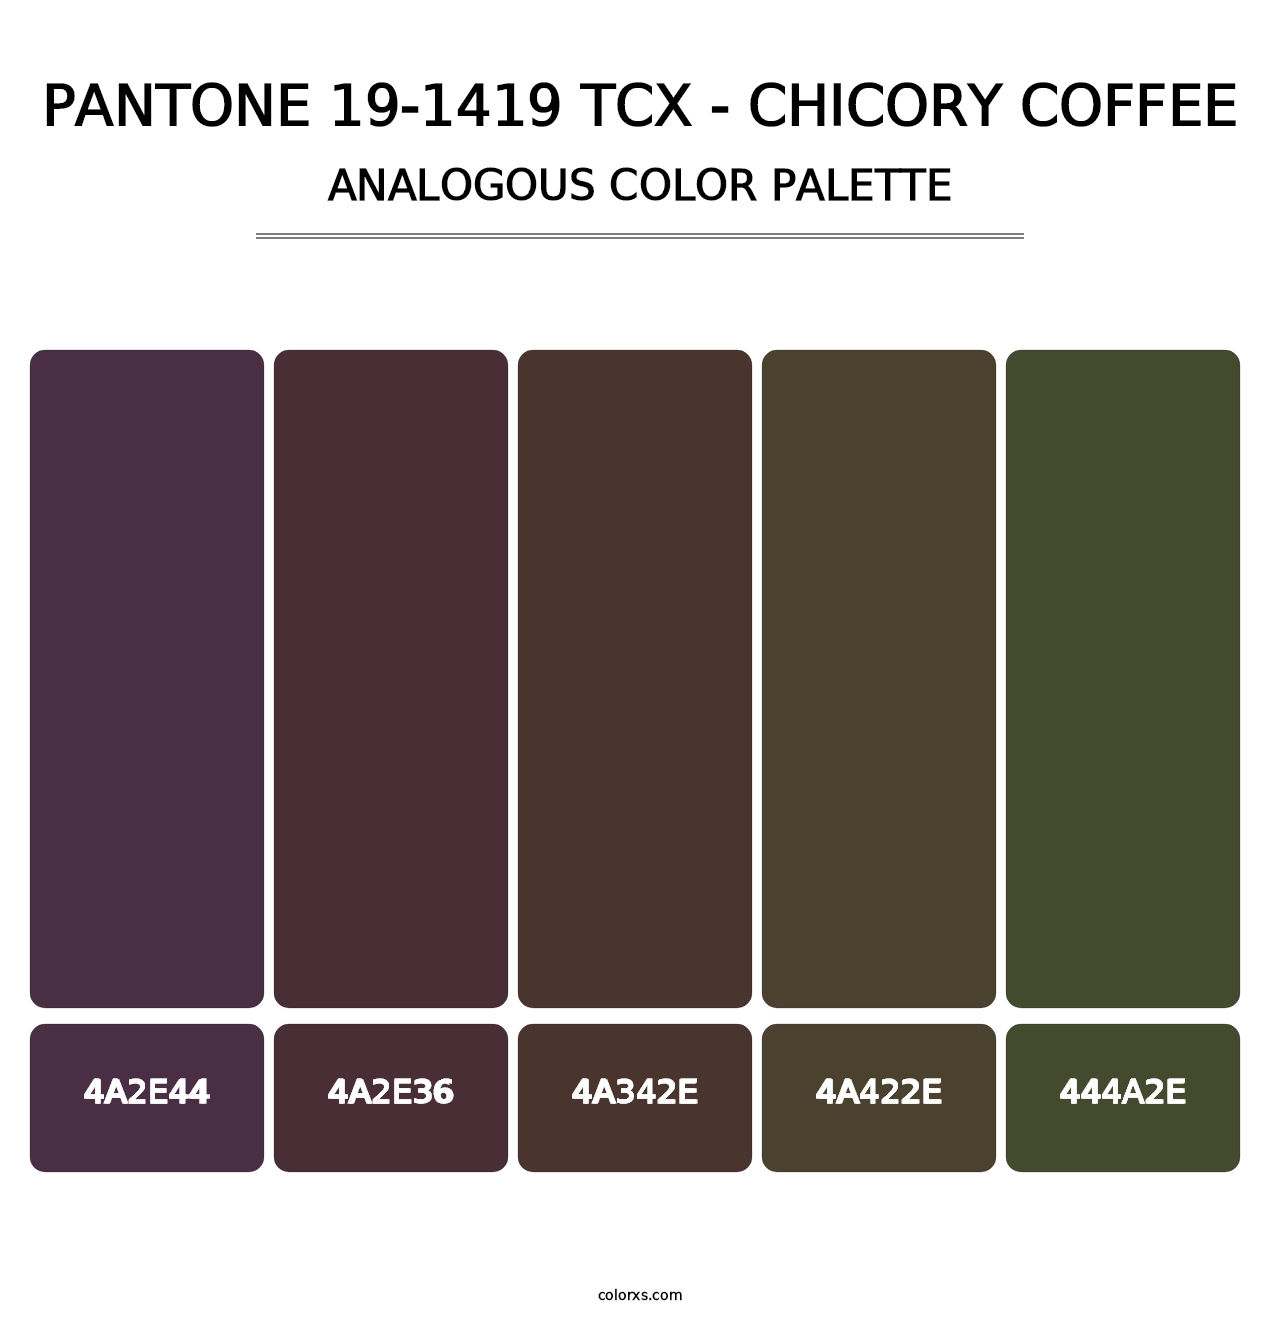 PANTONE 19-1419 TCX - Chicory Coffee - Analogous Color Palette